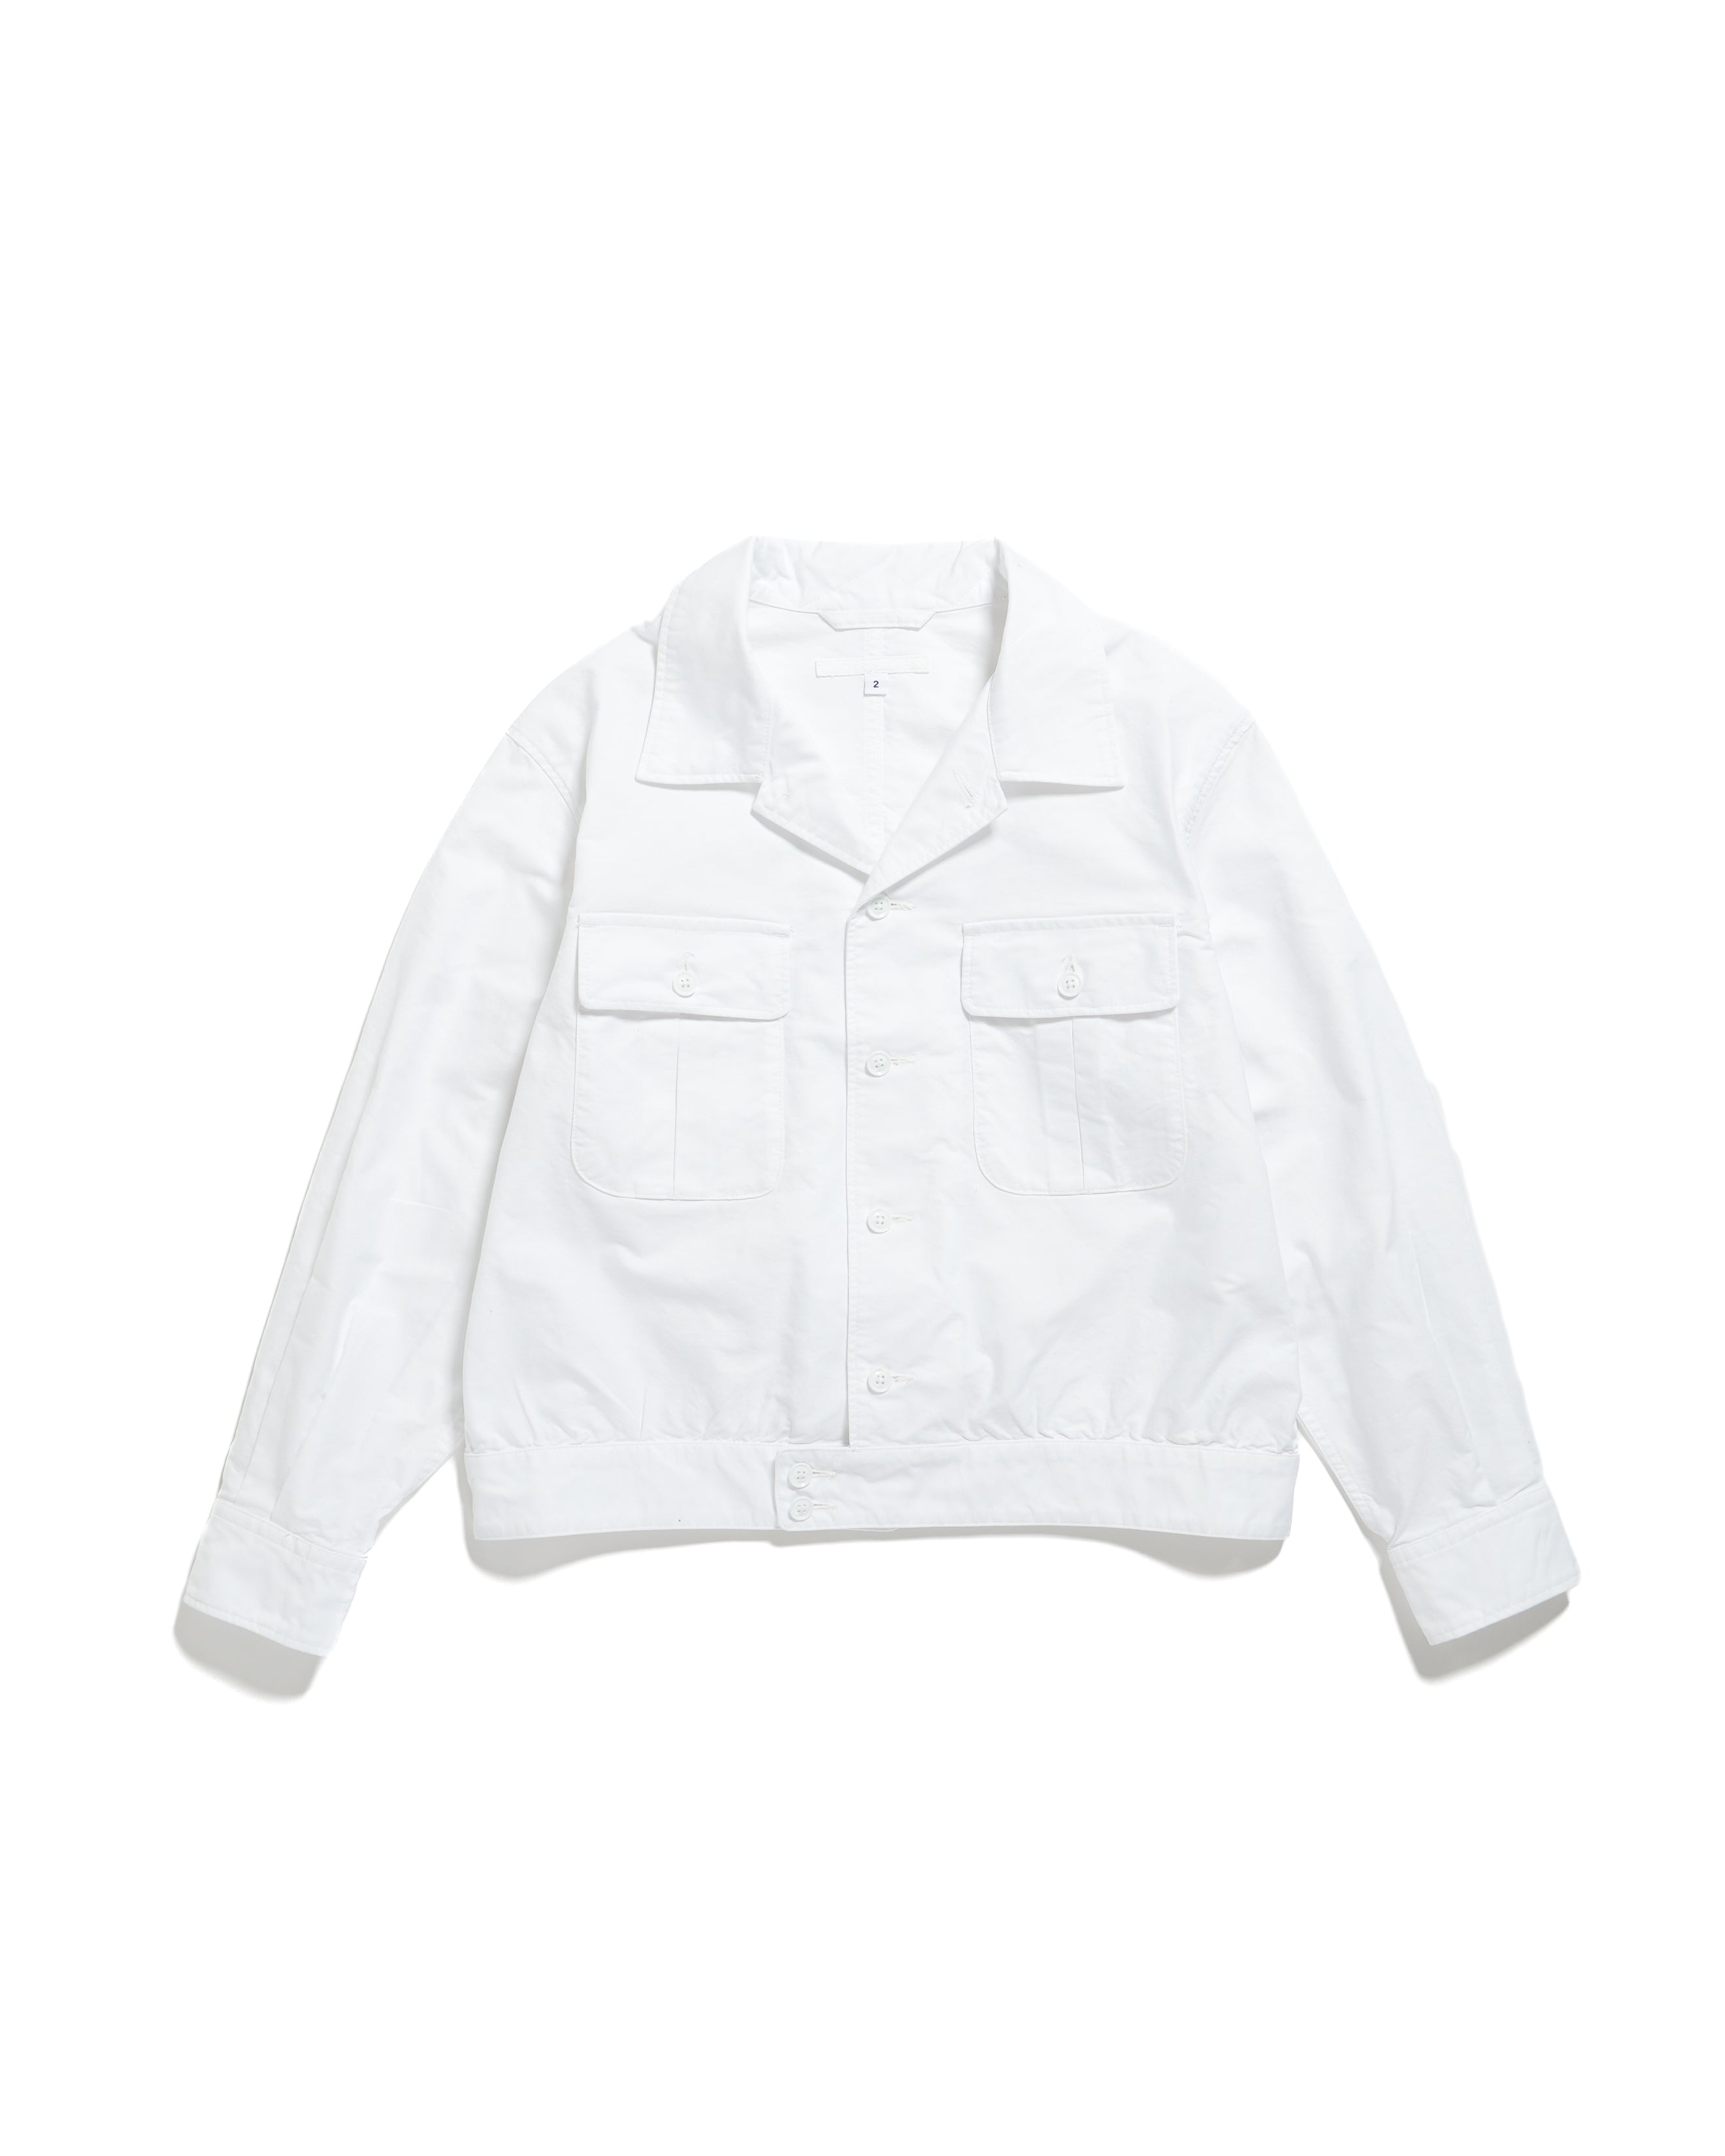 Ike Shirt - White Cotton Oxford